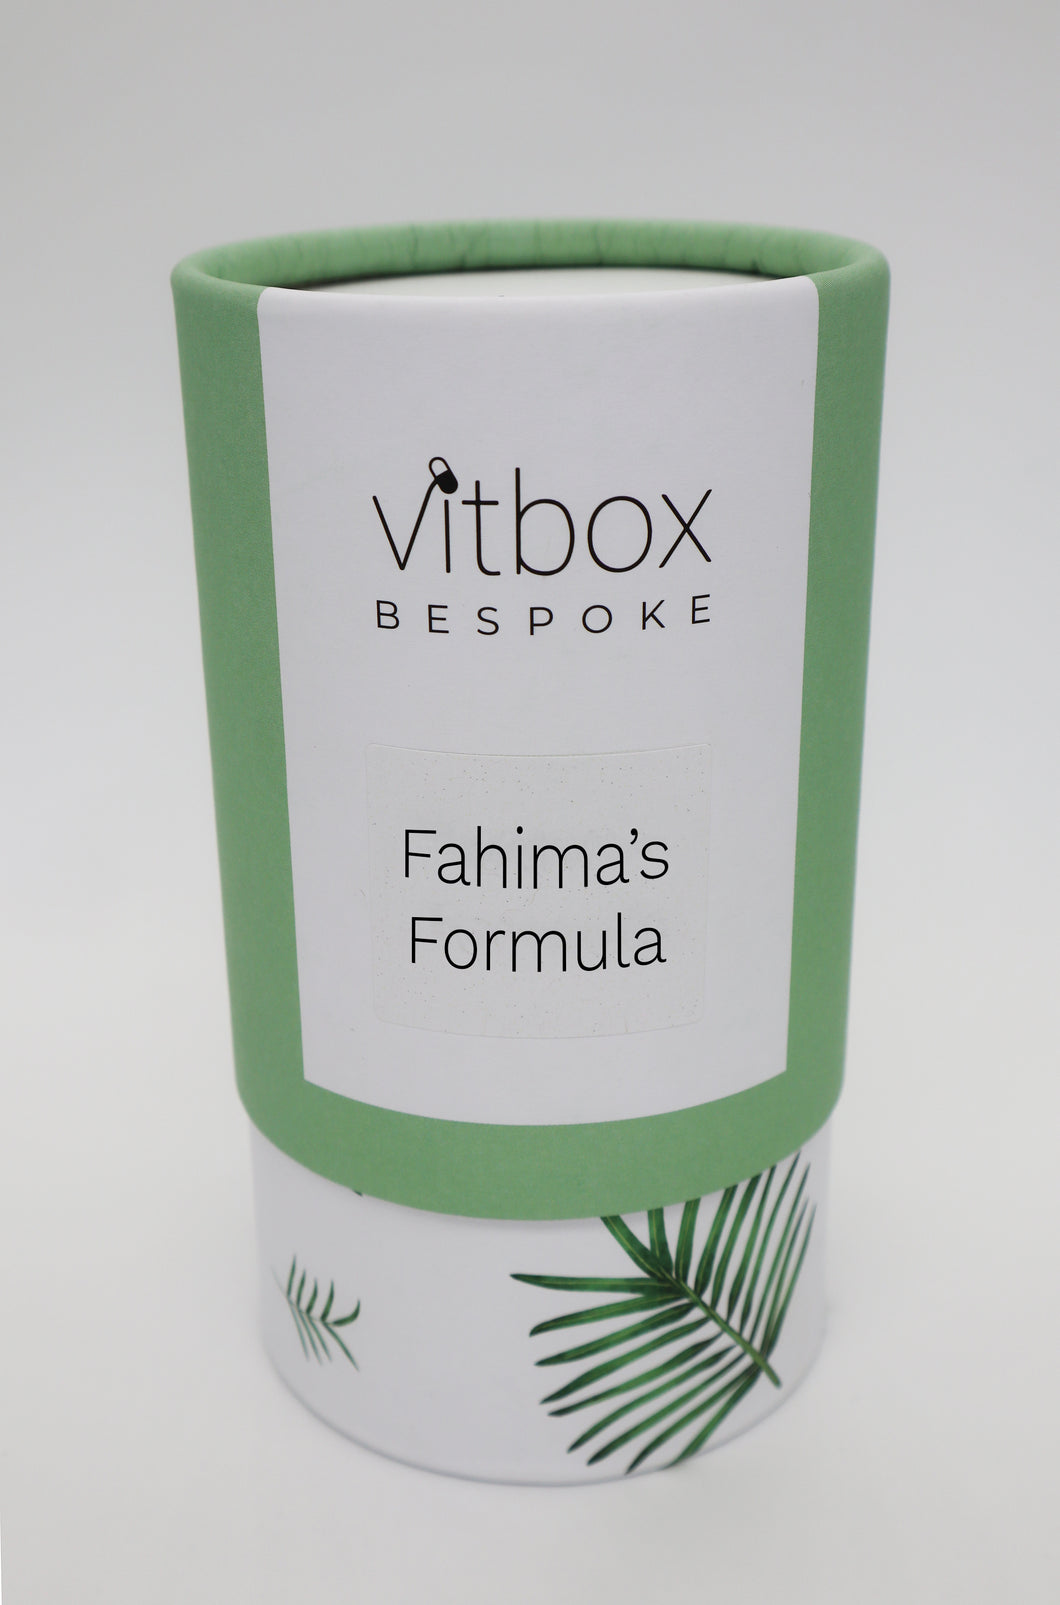 Fahima's Vitbox Bespoke